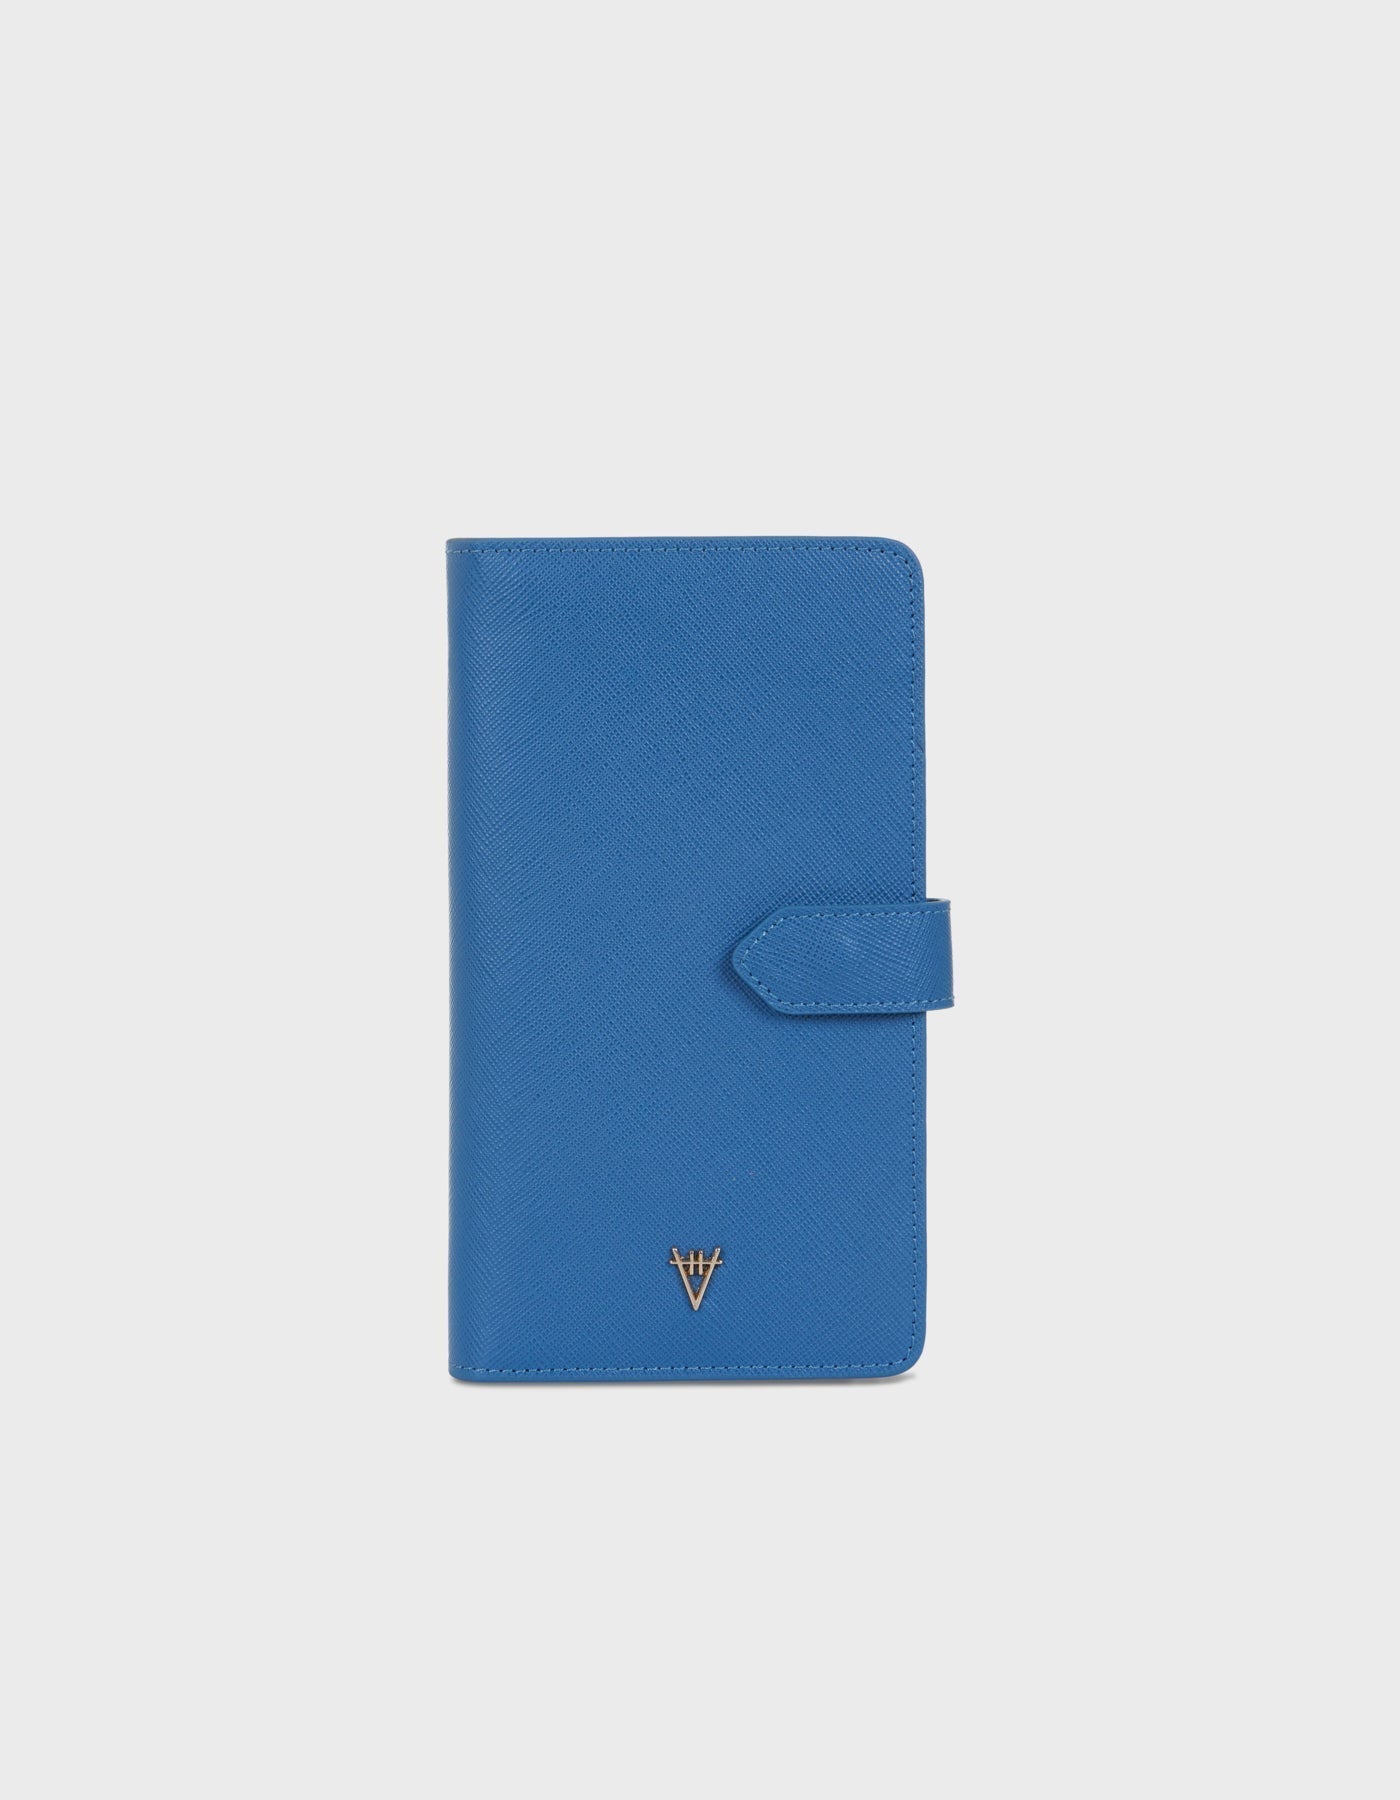 HiVa Atelier | Ita Crossbody Bag and Wallet Blue Sapphire | Beautiful and Versatile